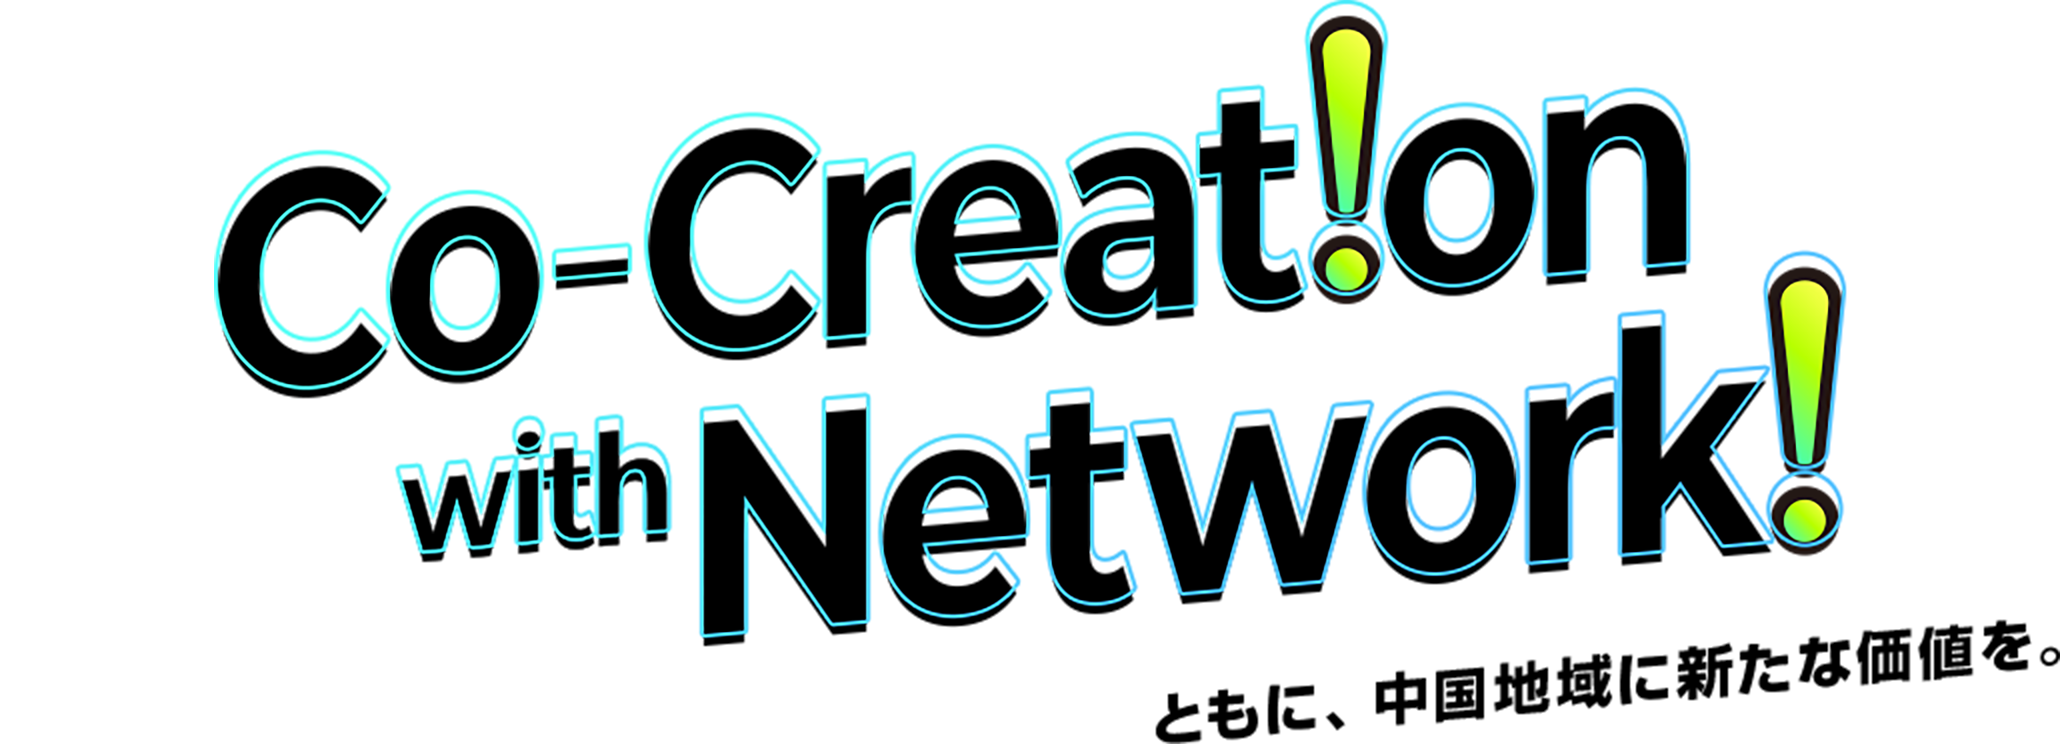 Co-Creation with Network! ともに、中国地域に新たな価値を。